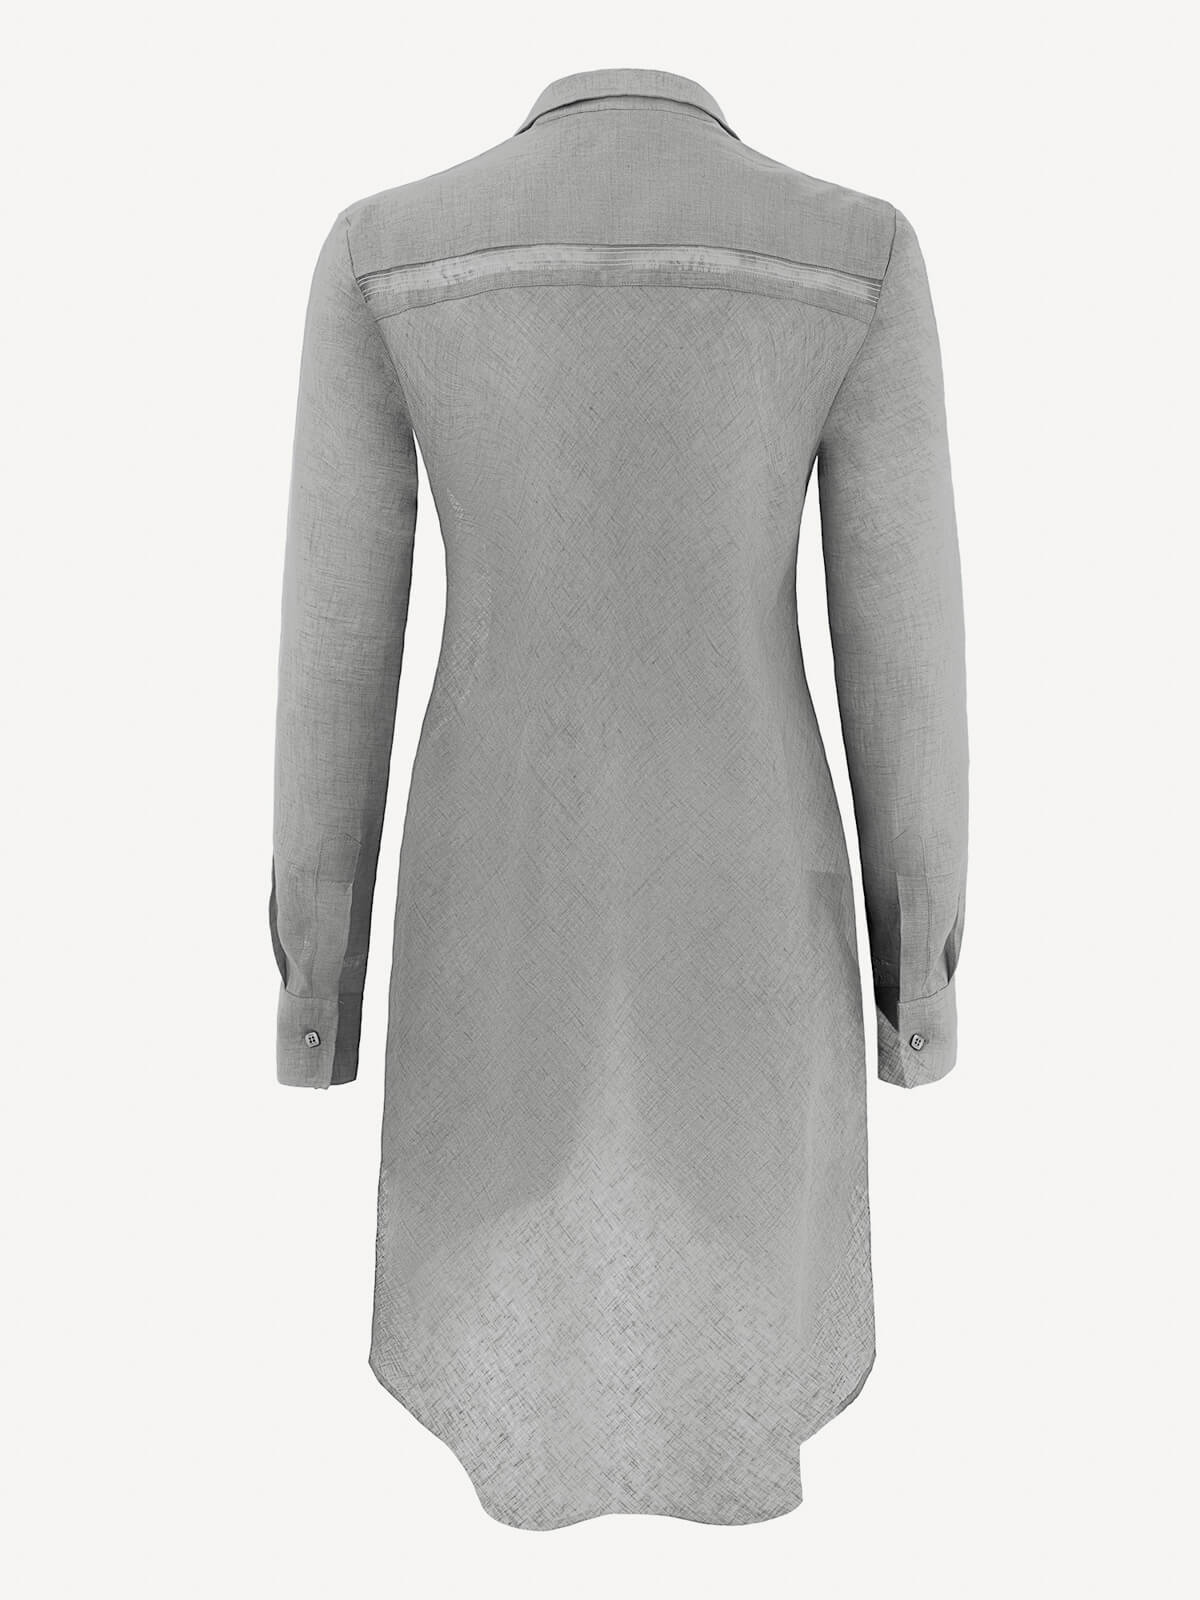 Camicia Royal 100% Capri light grey linen shirt back